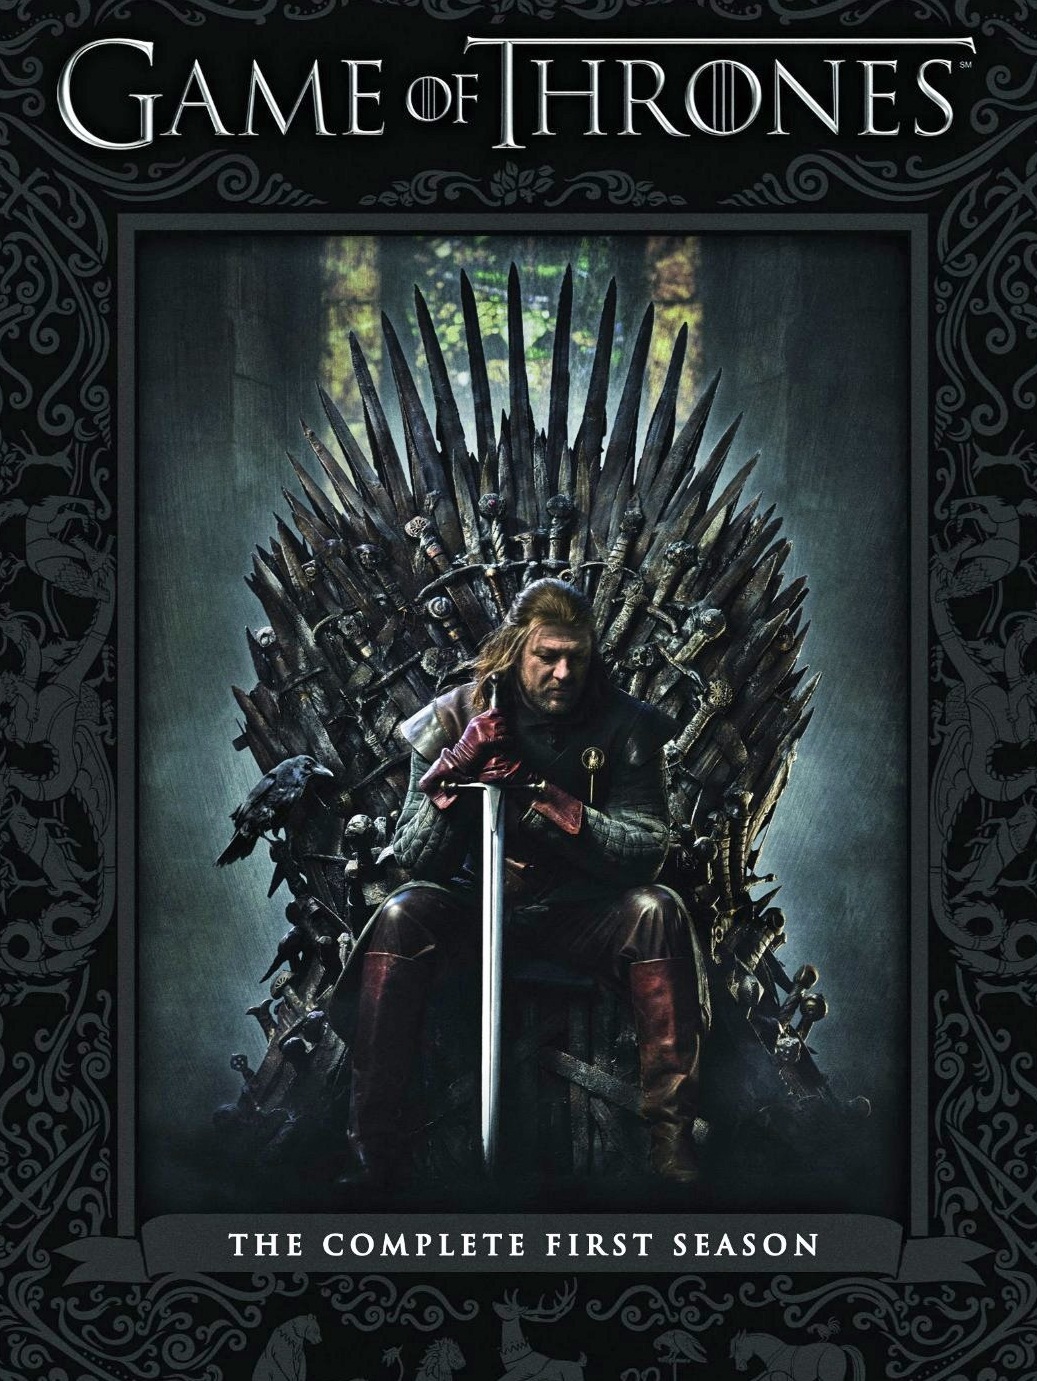 Contest \u2013 Win a Game of Thrones Season 1 DVD